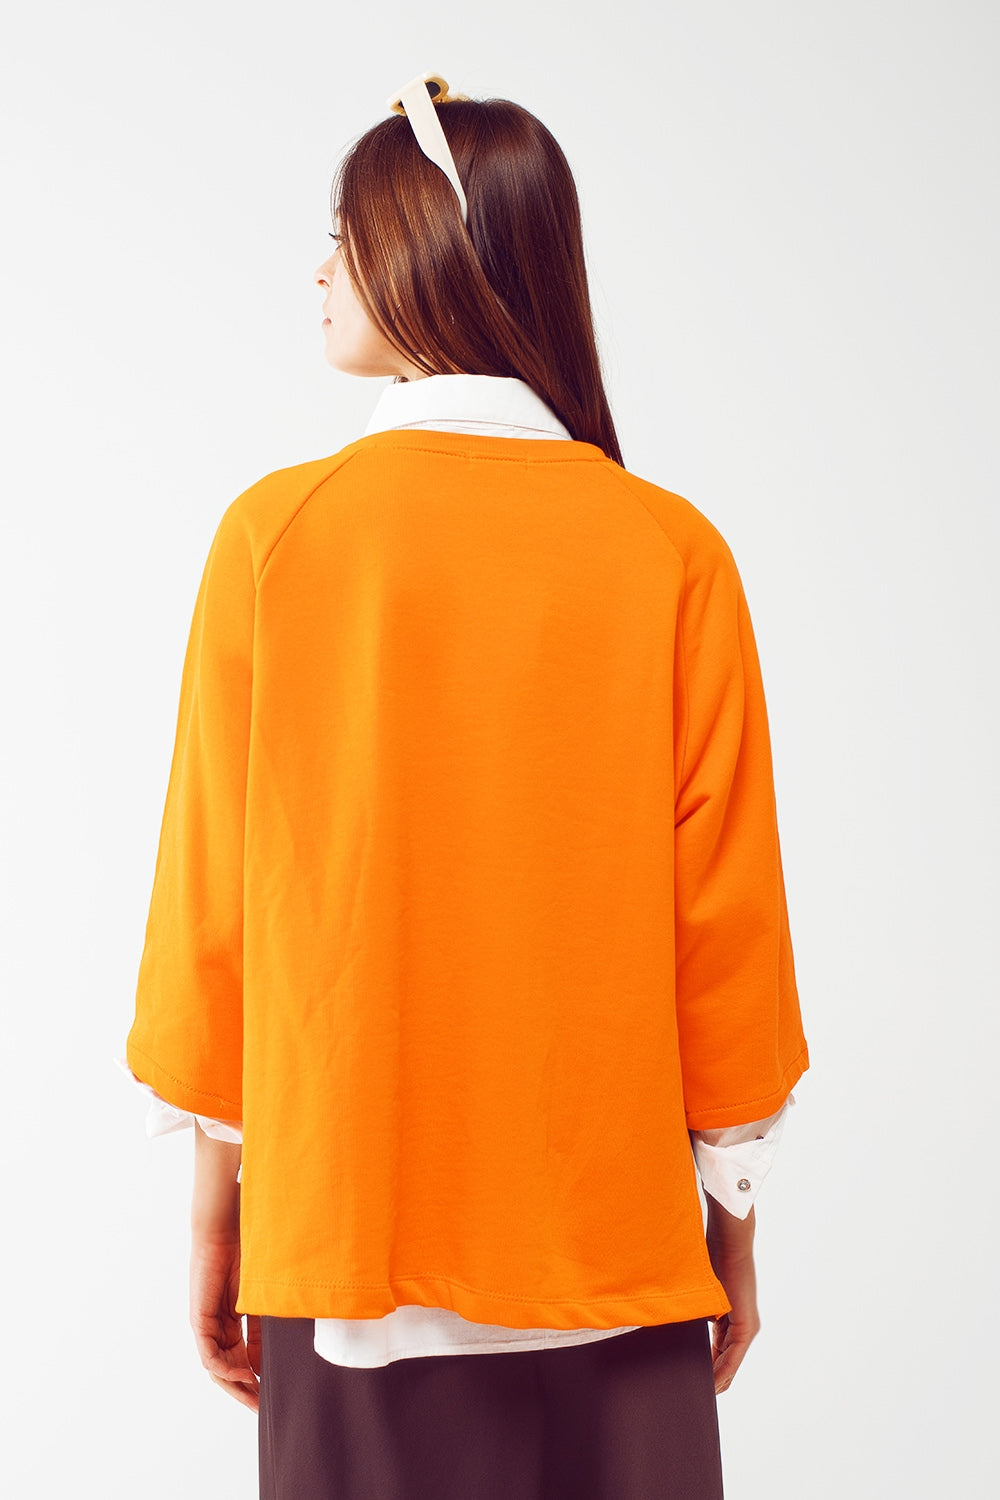 Assymetric sweatshirt with Vintage 18 Text in orange - Szua Store